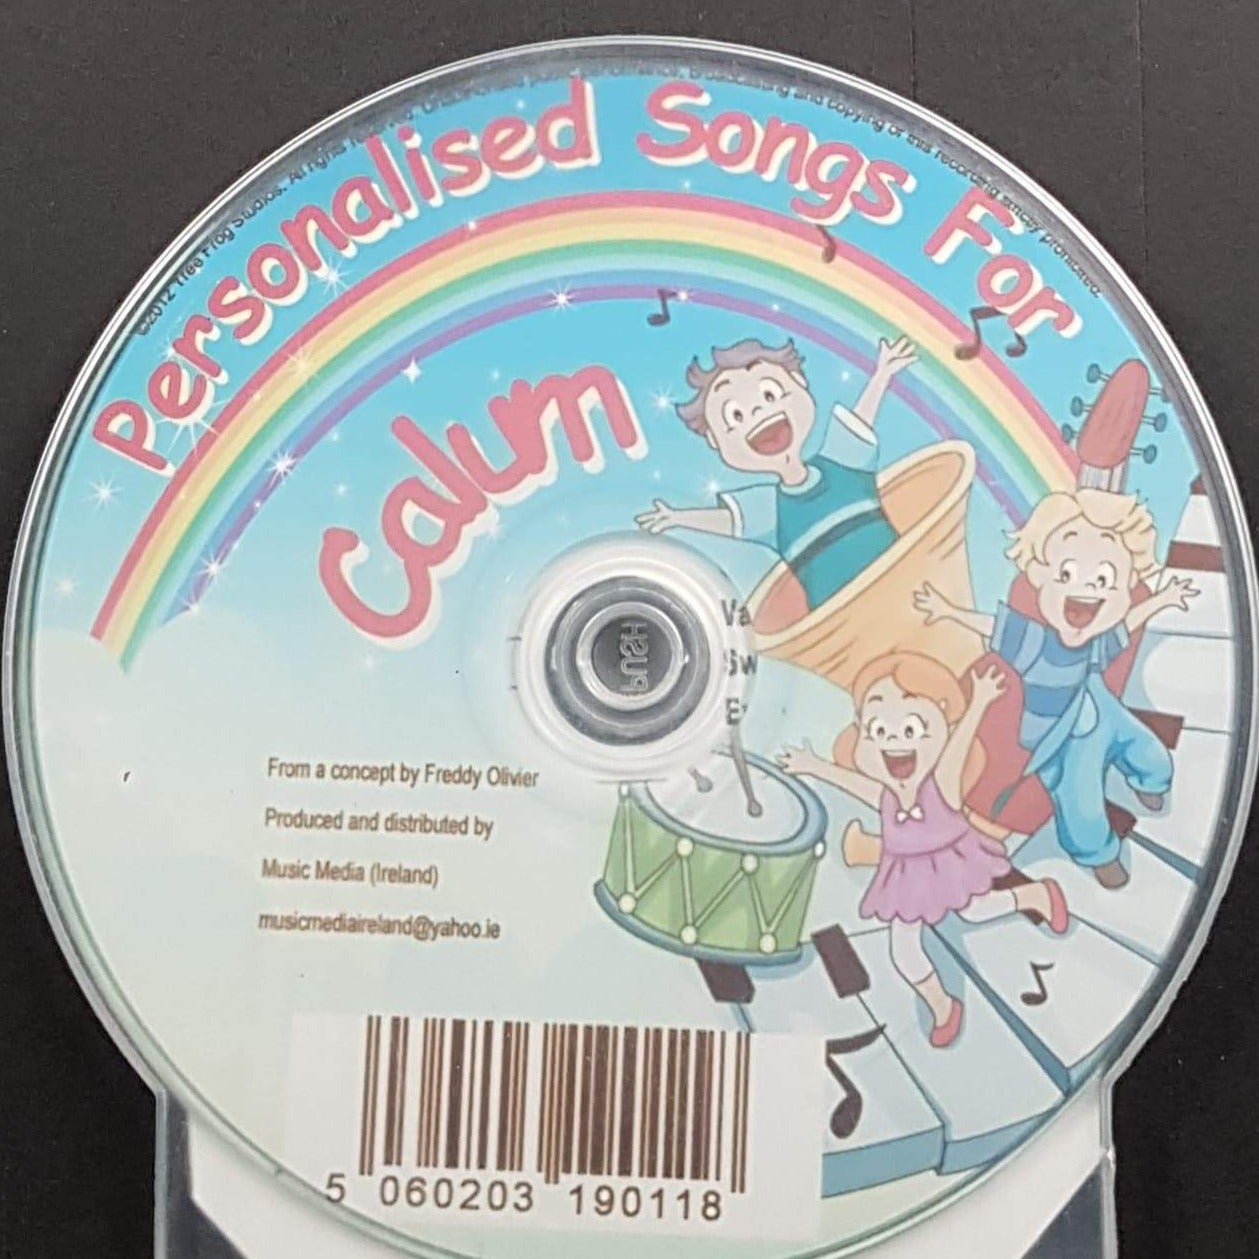 CD - Personalised Children's Songs / Calum